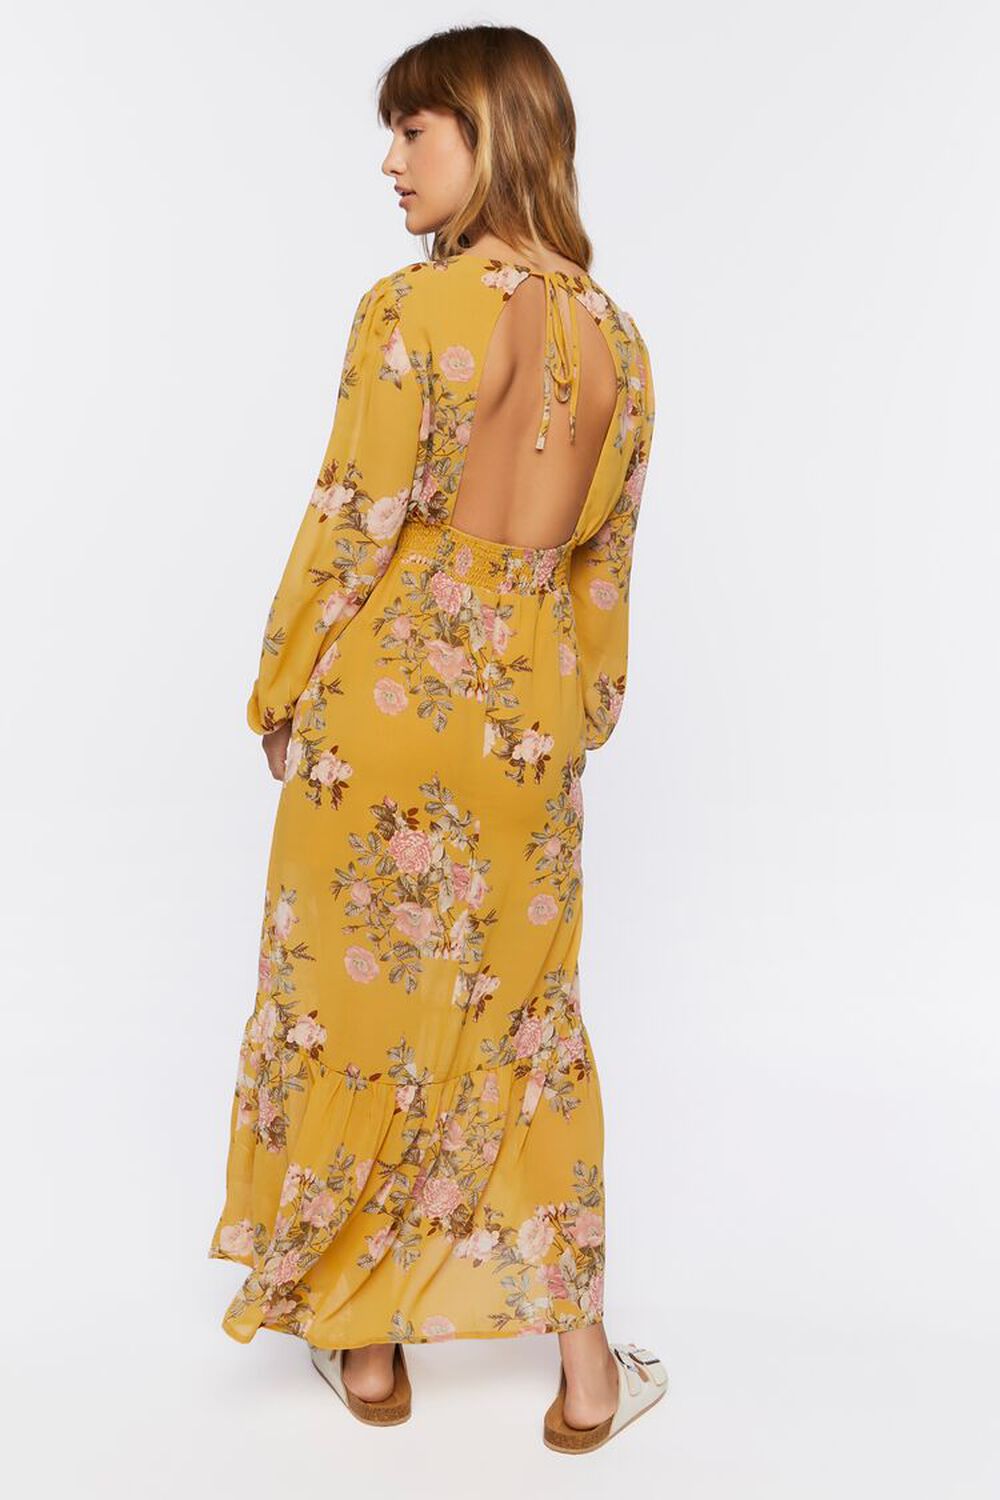 MUSTARD/MULTI Plunging Floral Print Maxi Dress, image 3